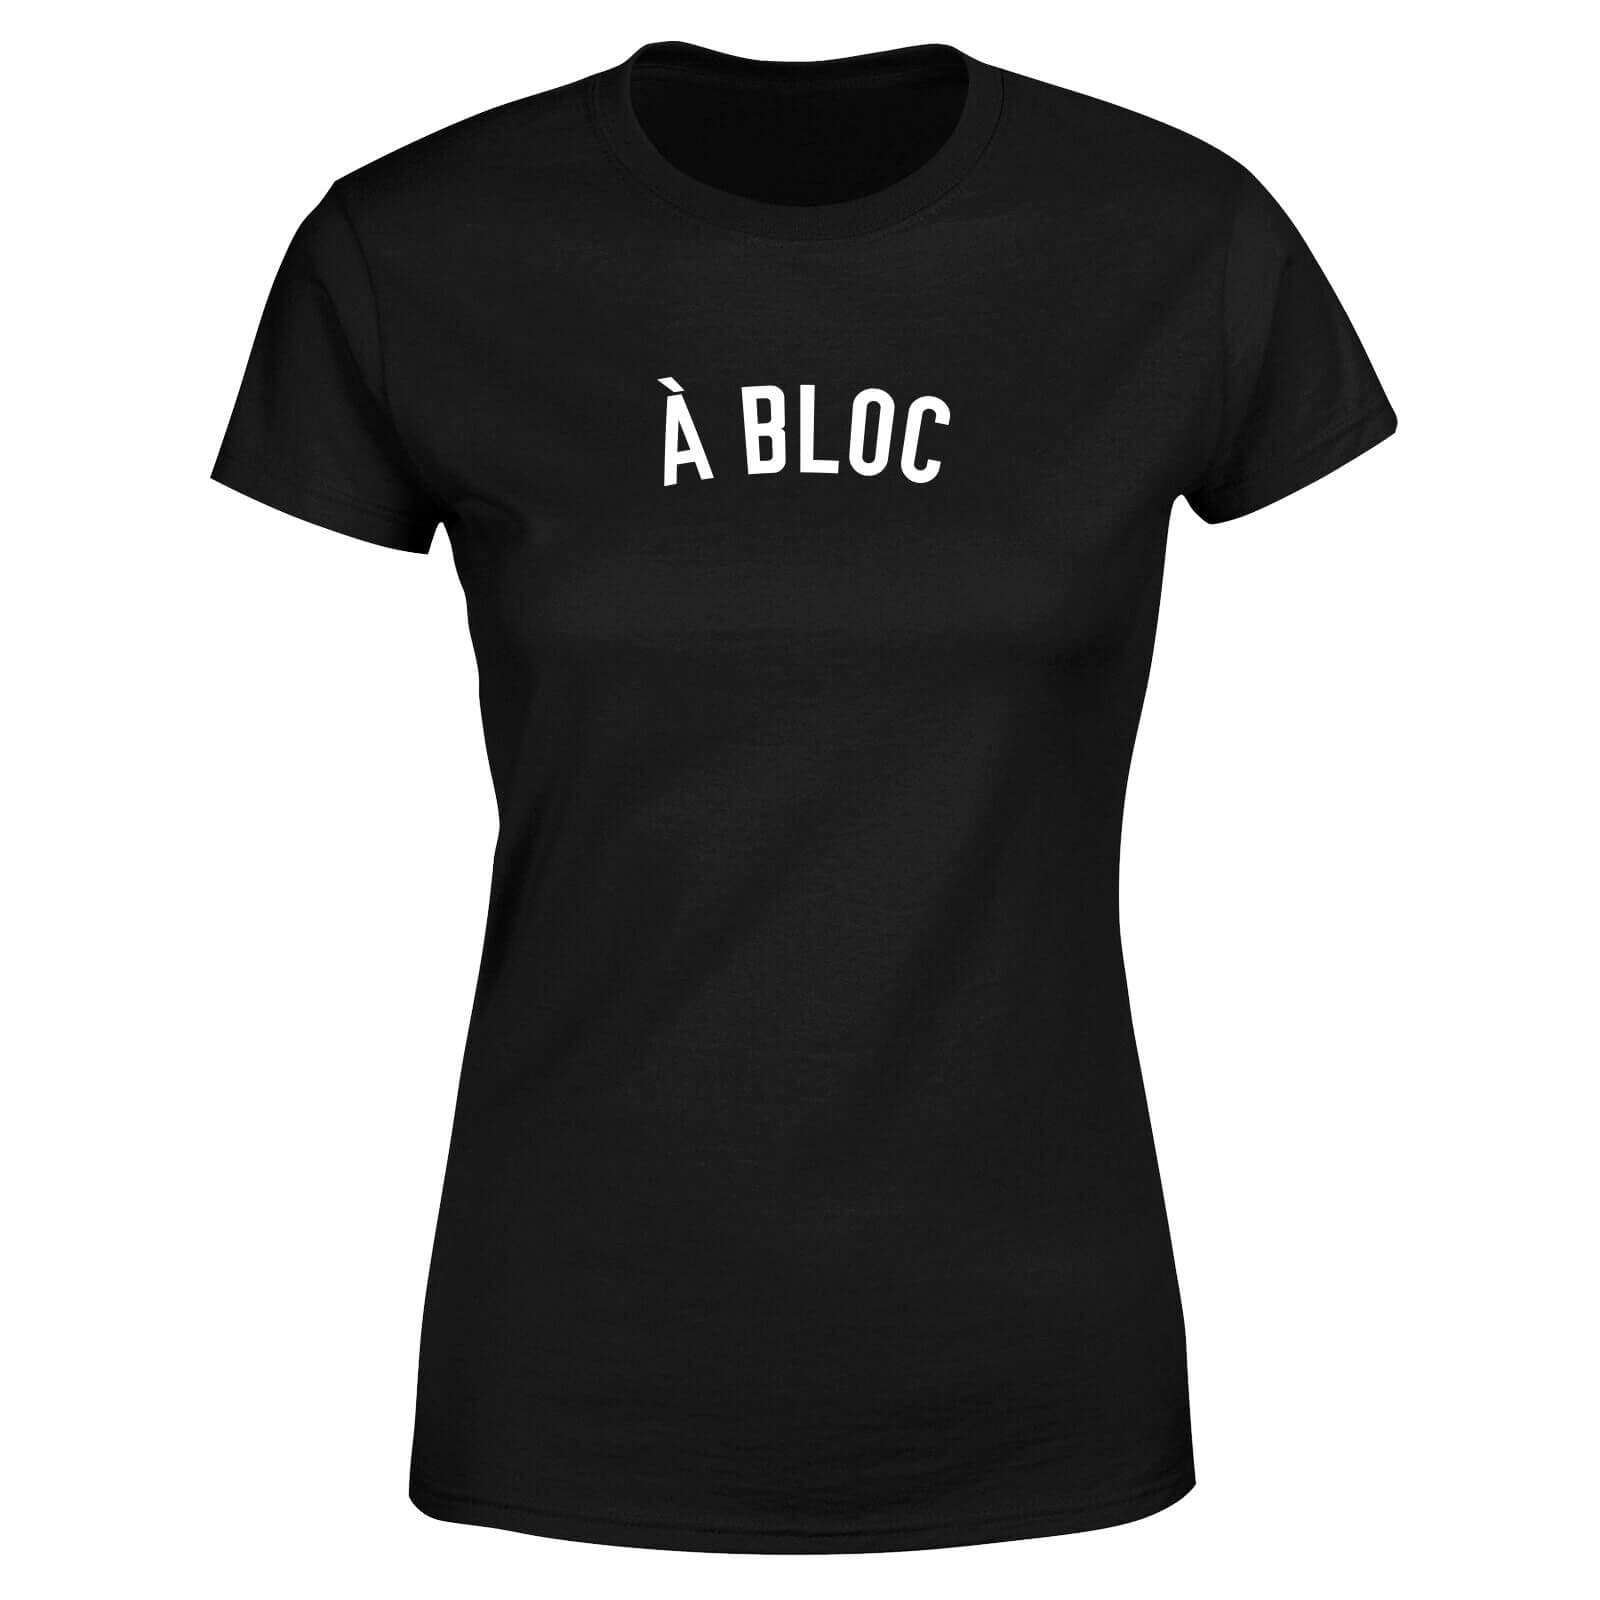 A Bloc Women's T-Shirt - Black - S - Black